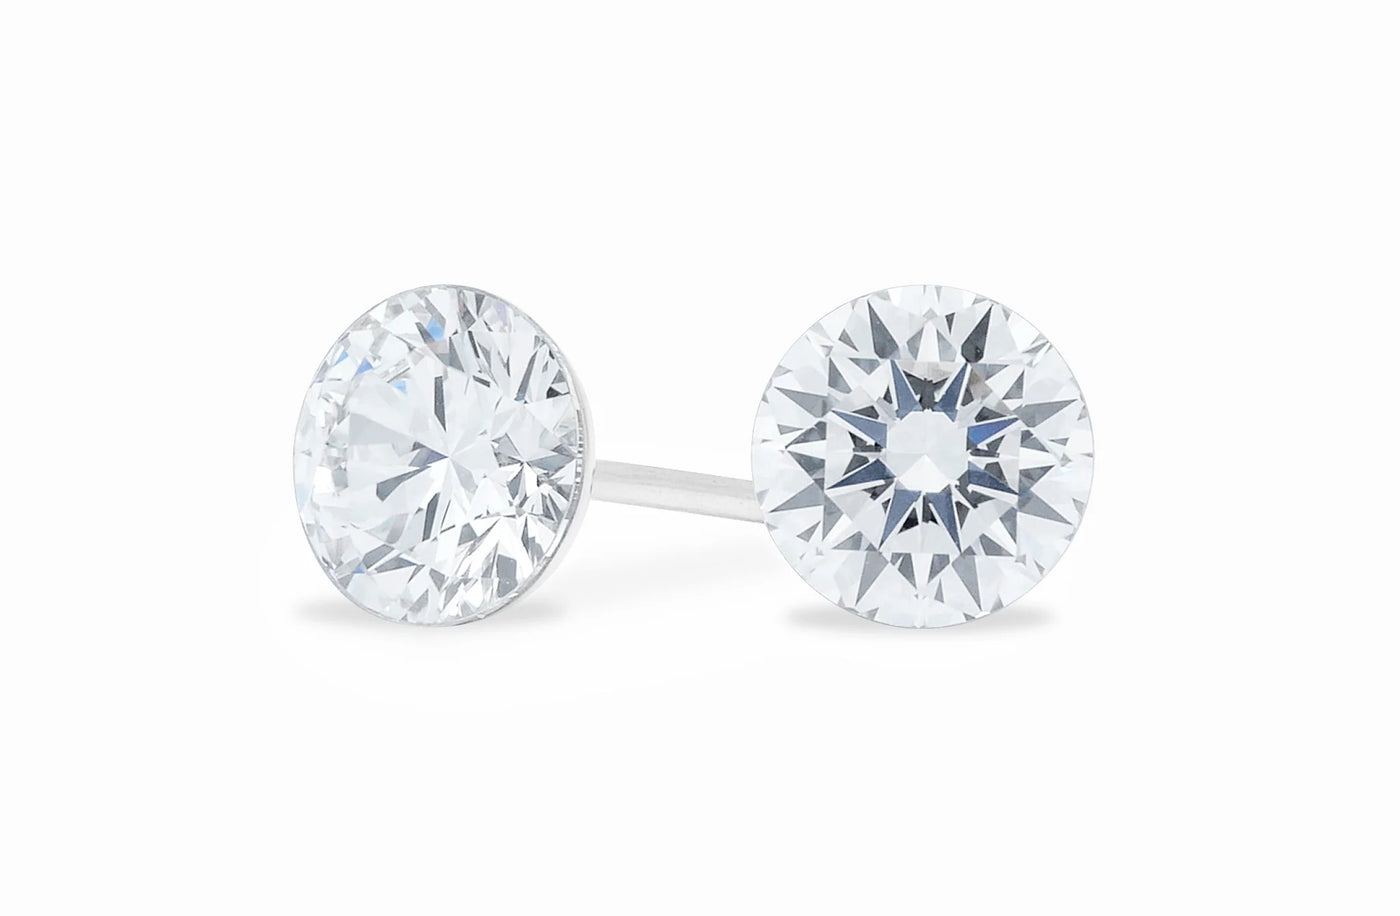 The Floeting® Diamond Stud Earrings